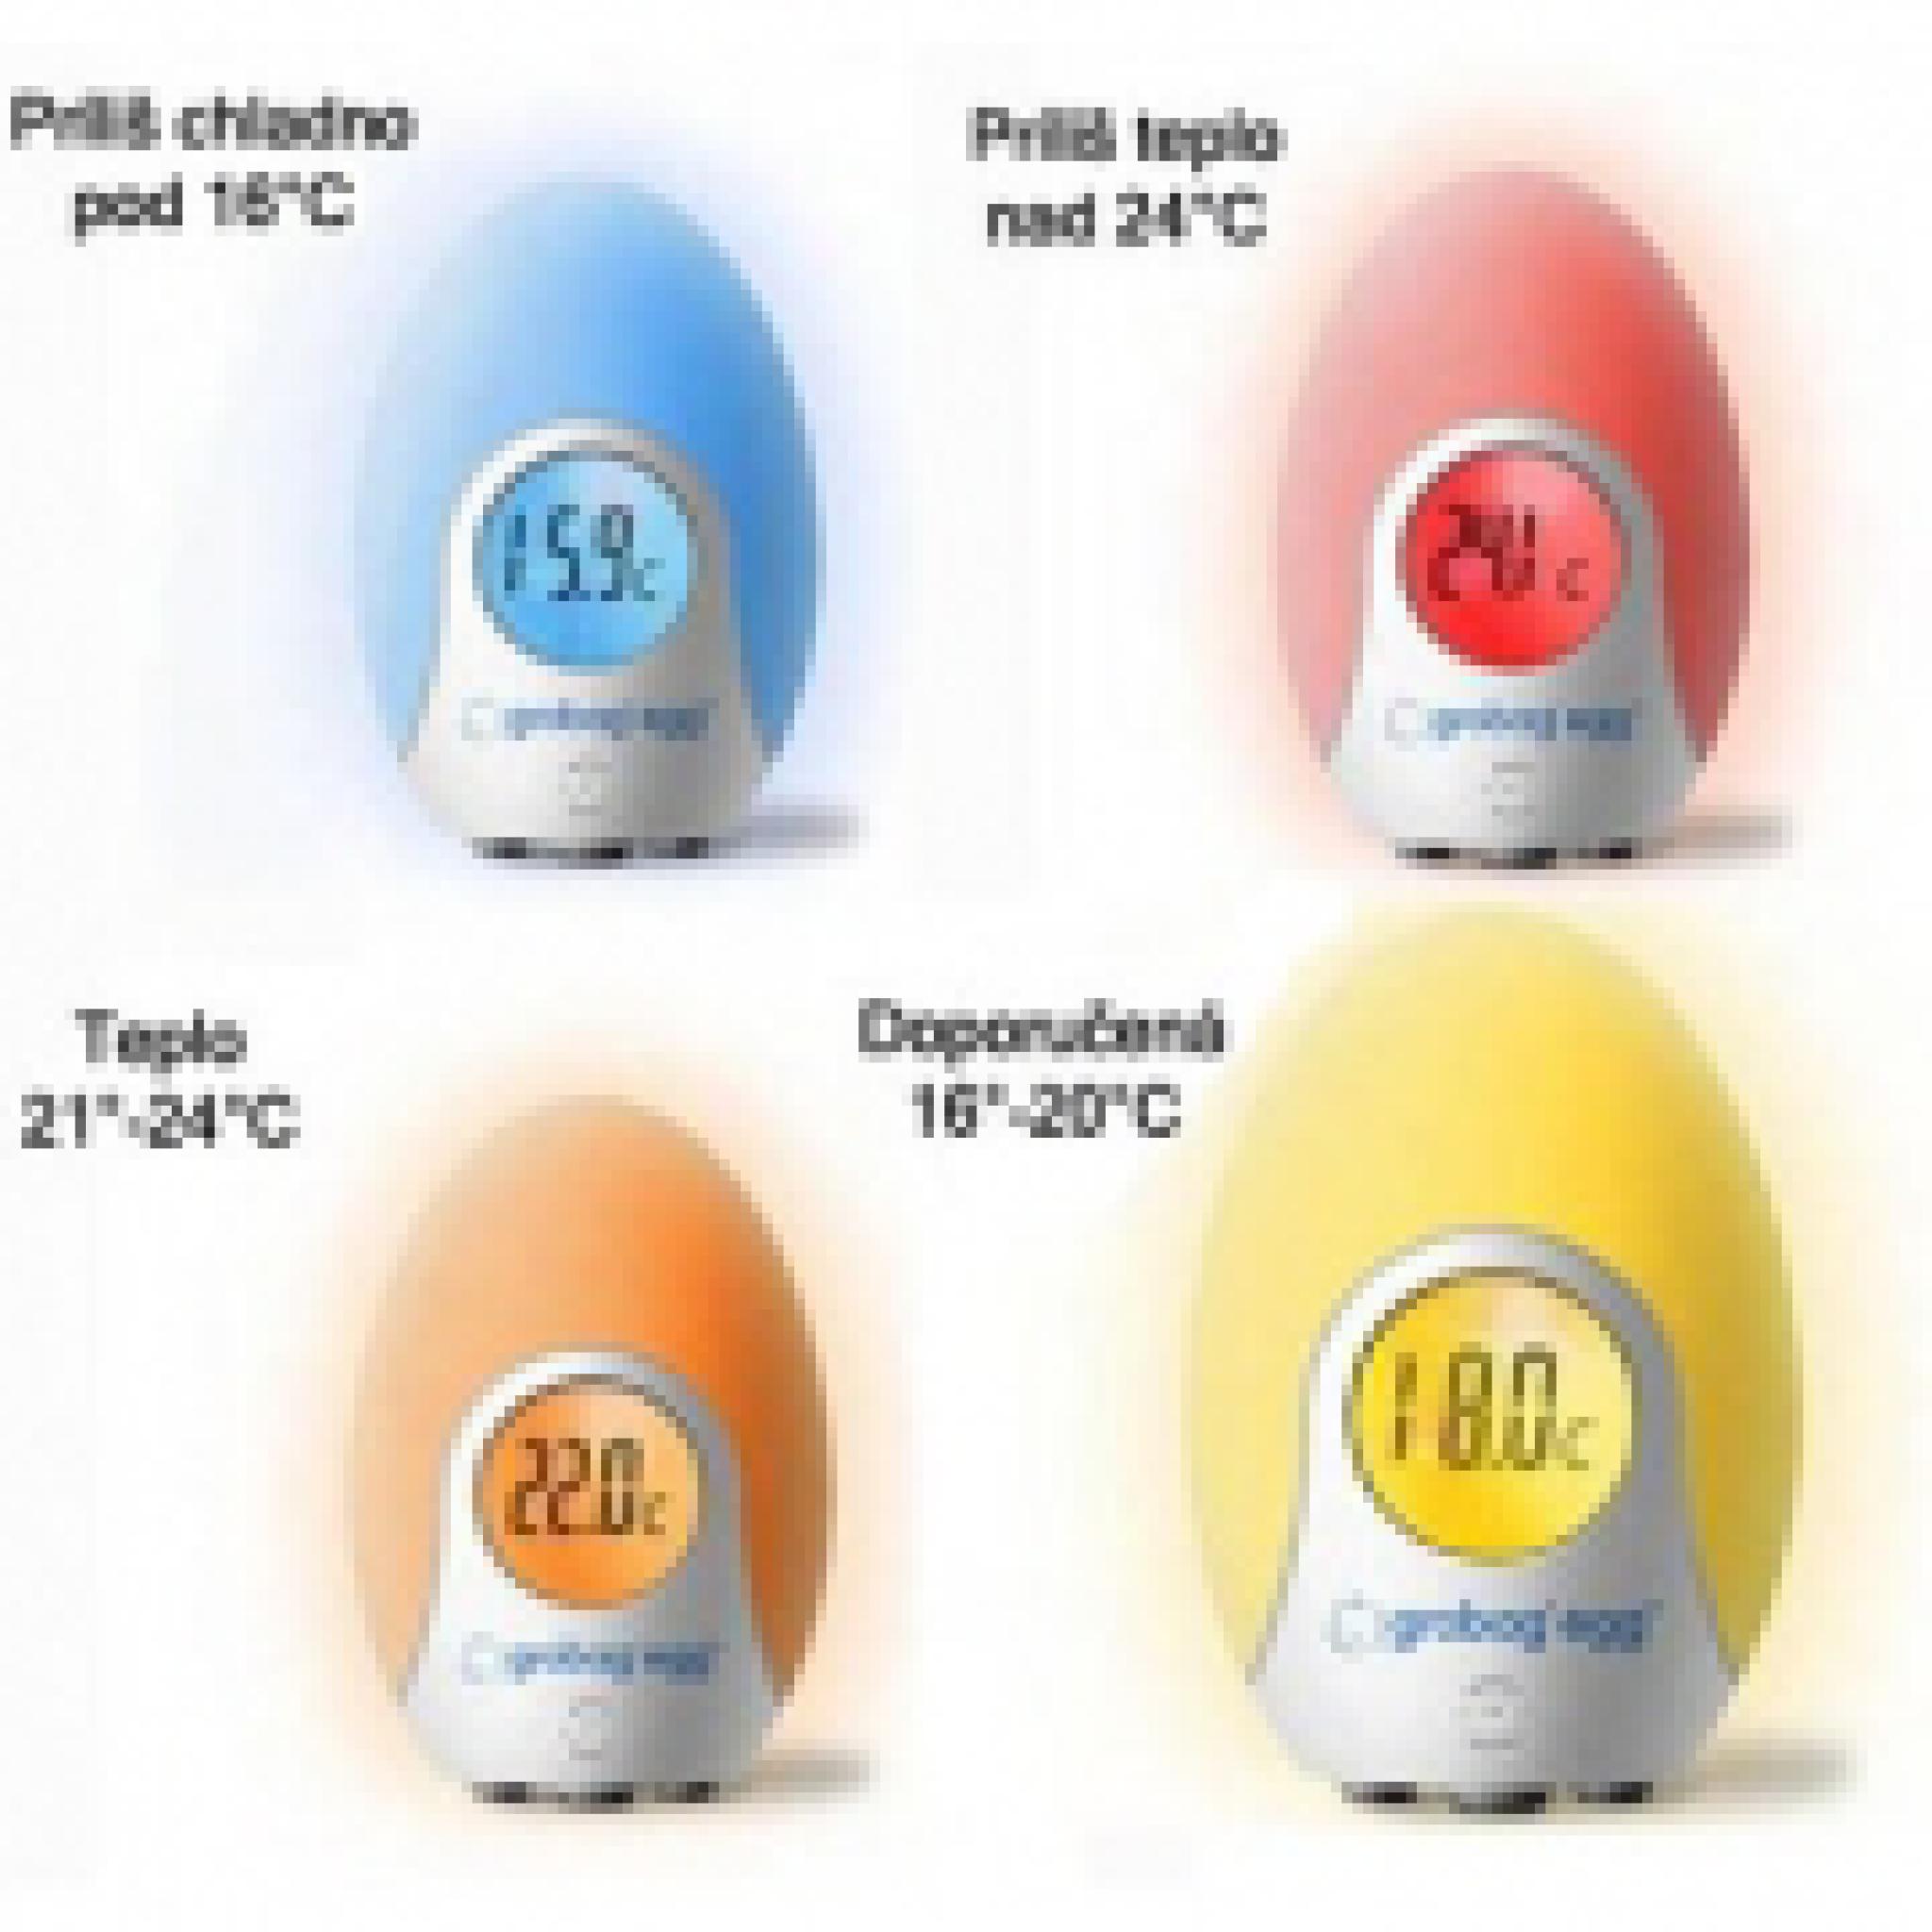 Warm over. Термометр для яиц. Детский термометр Tommee Tippee Groegg Digital Nursery Thermometer.